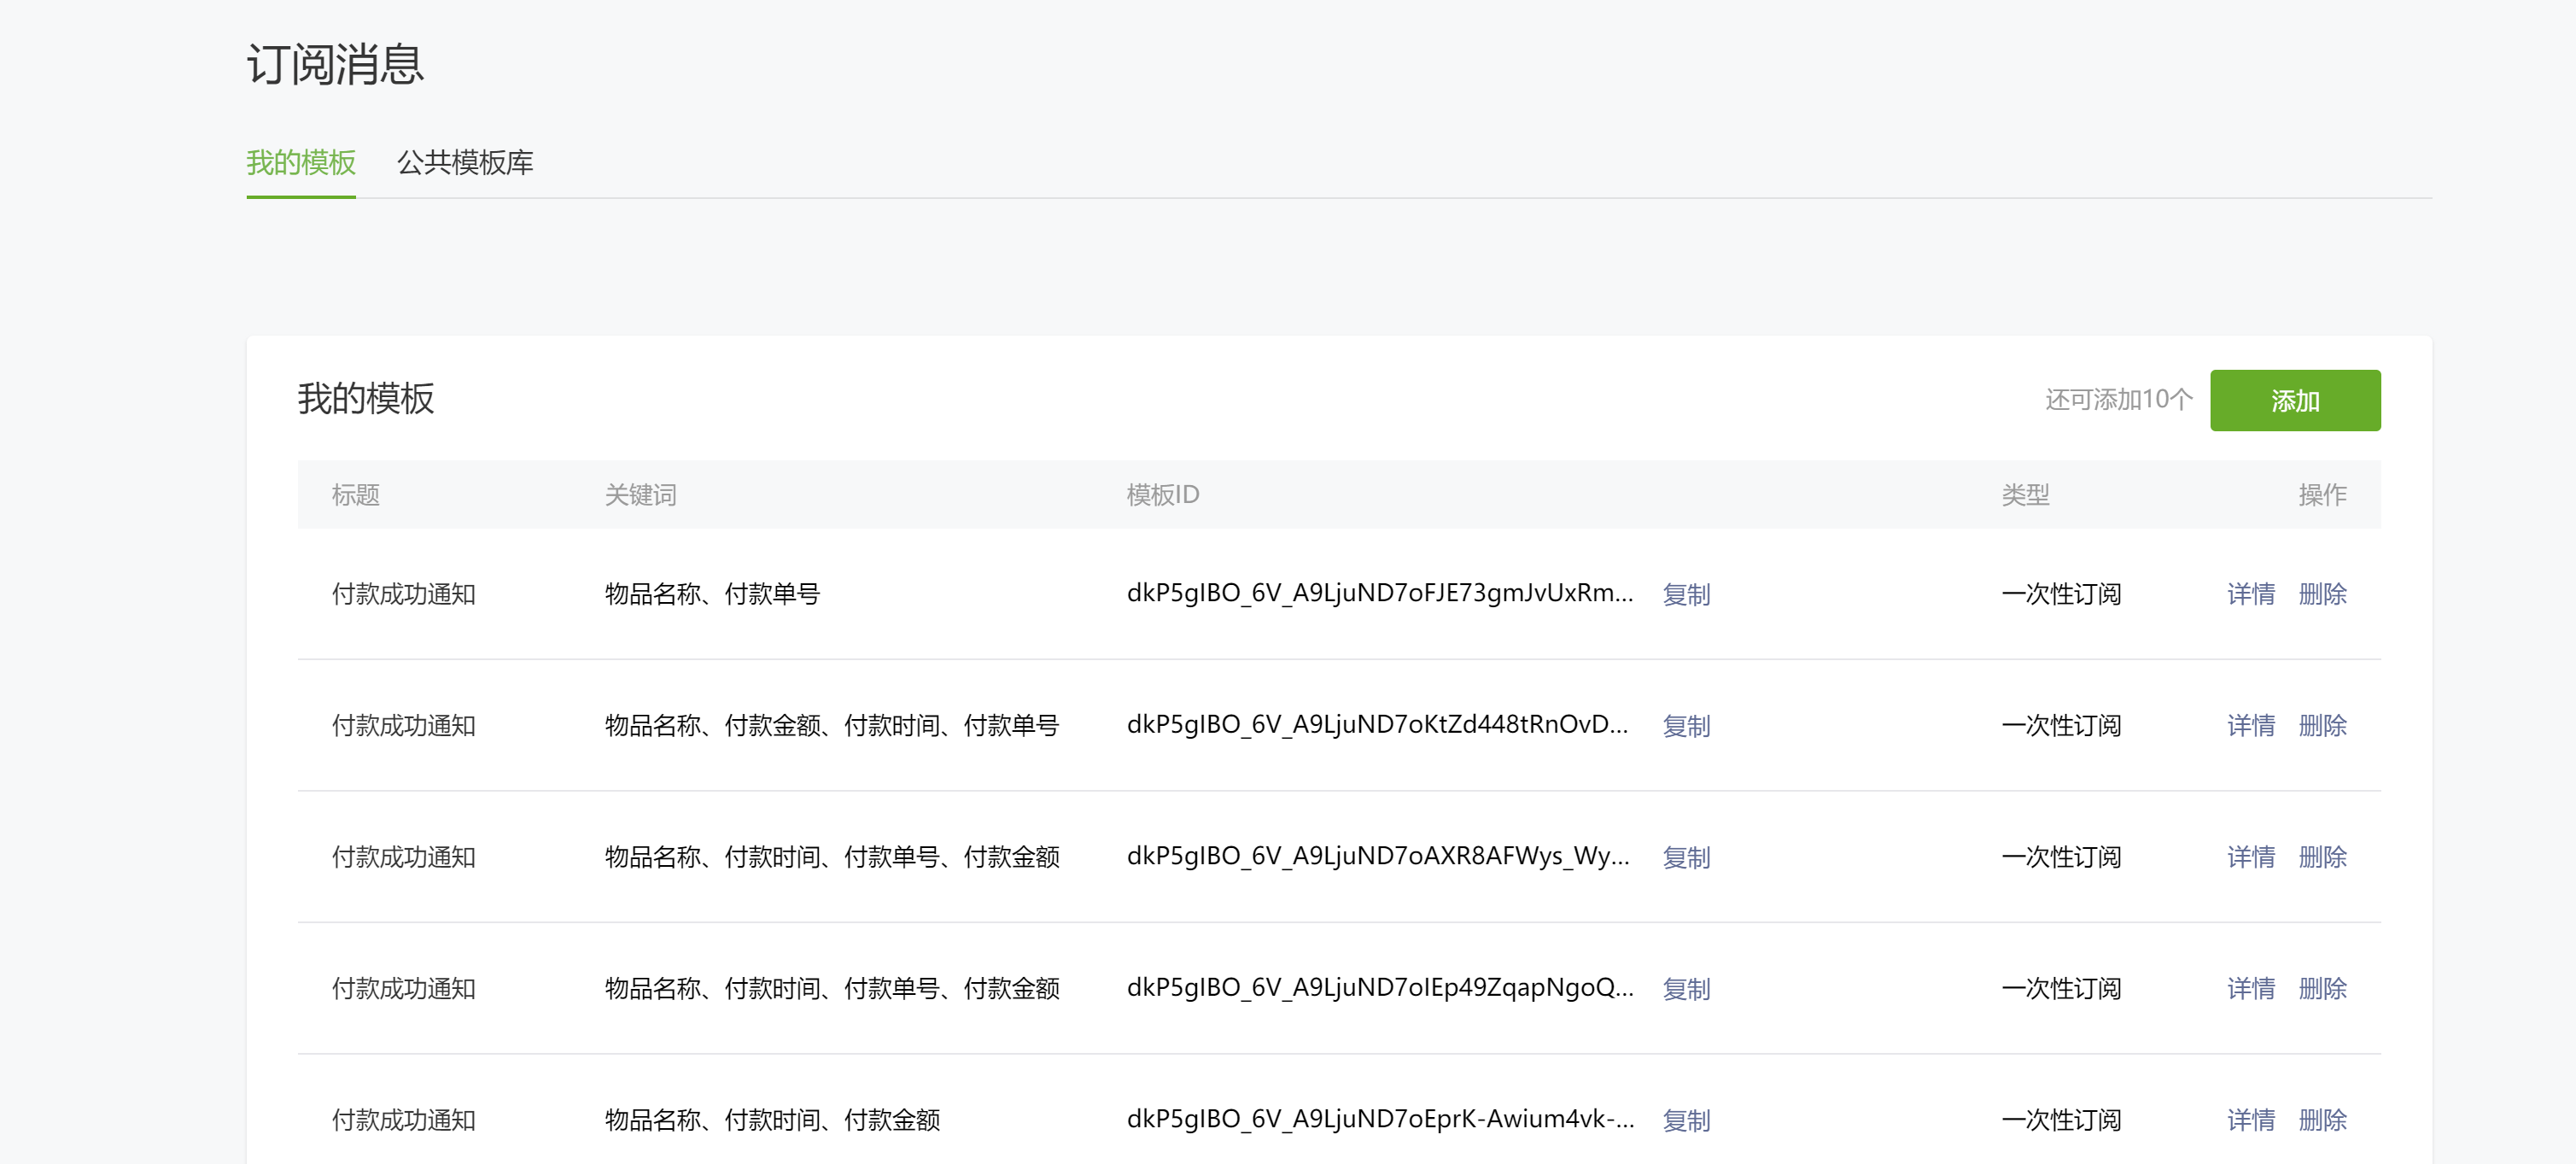 WeChat program messages and subscription messages